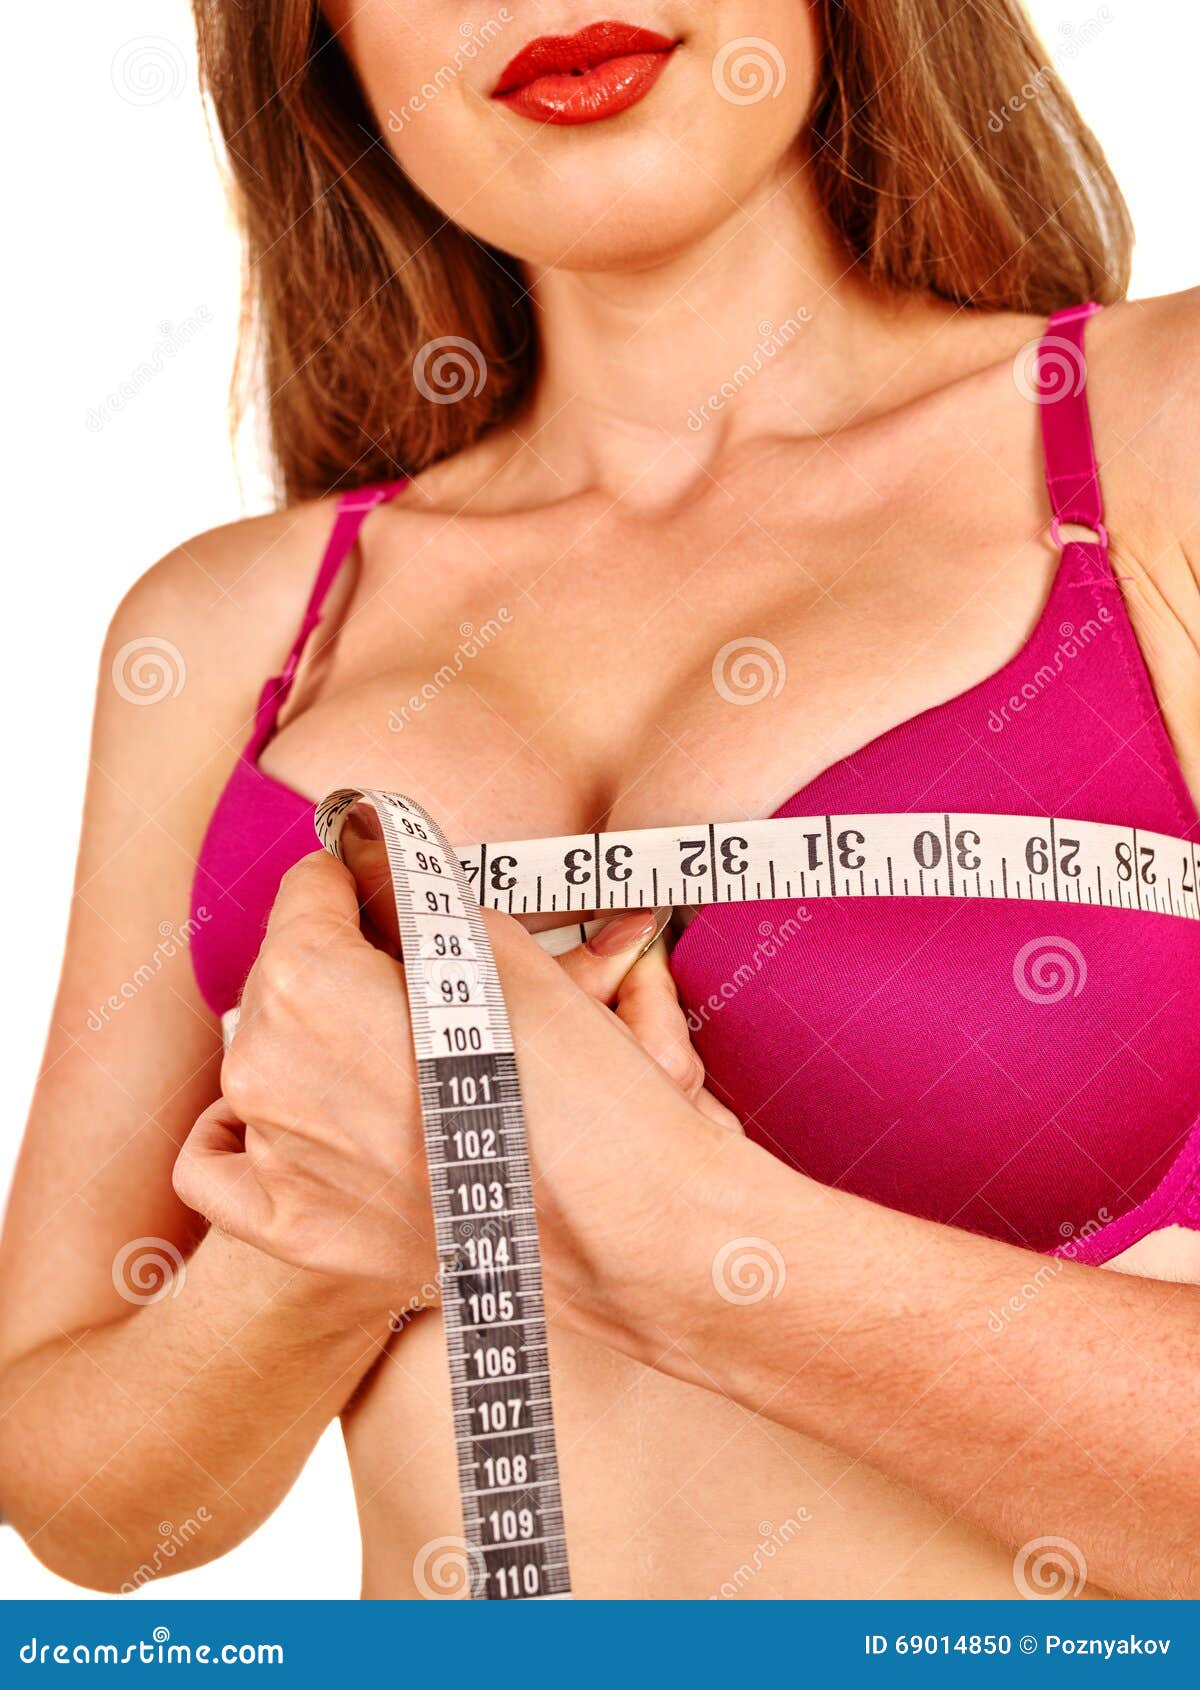 Girl in Lingerie Measures Her Breast Measuring Tape. Stock Photo